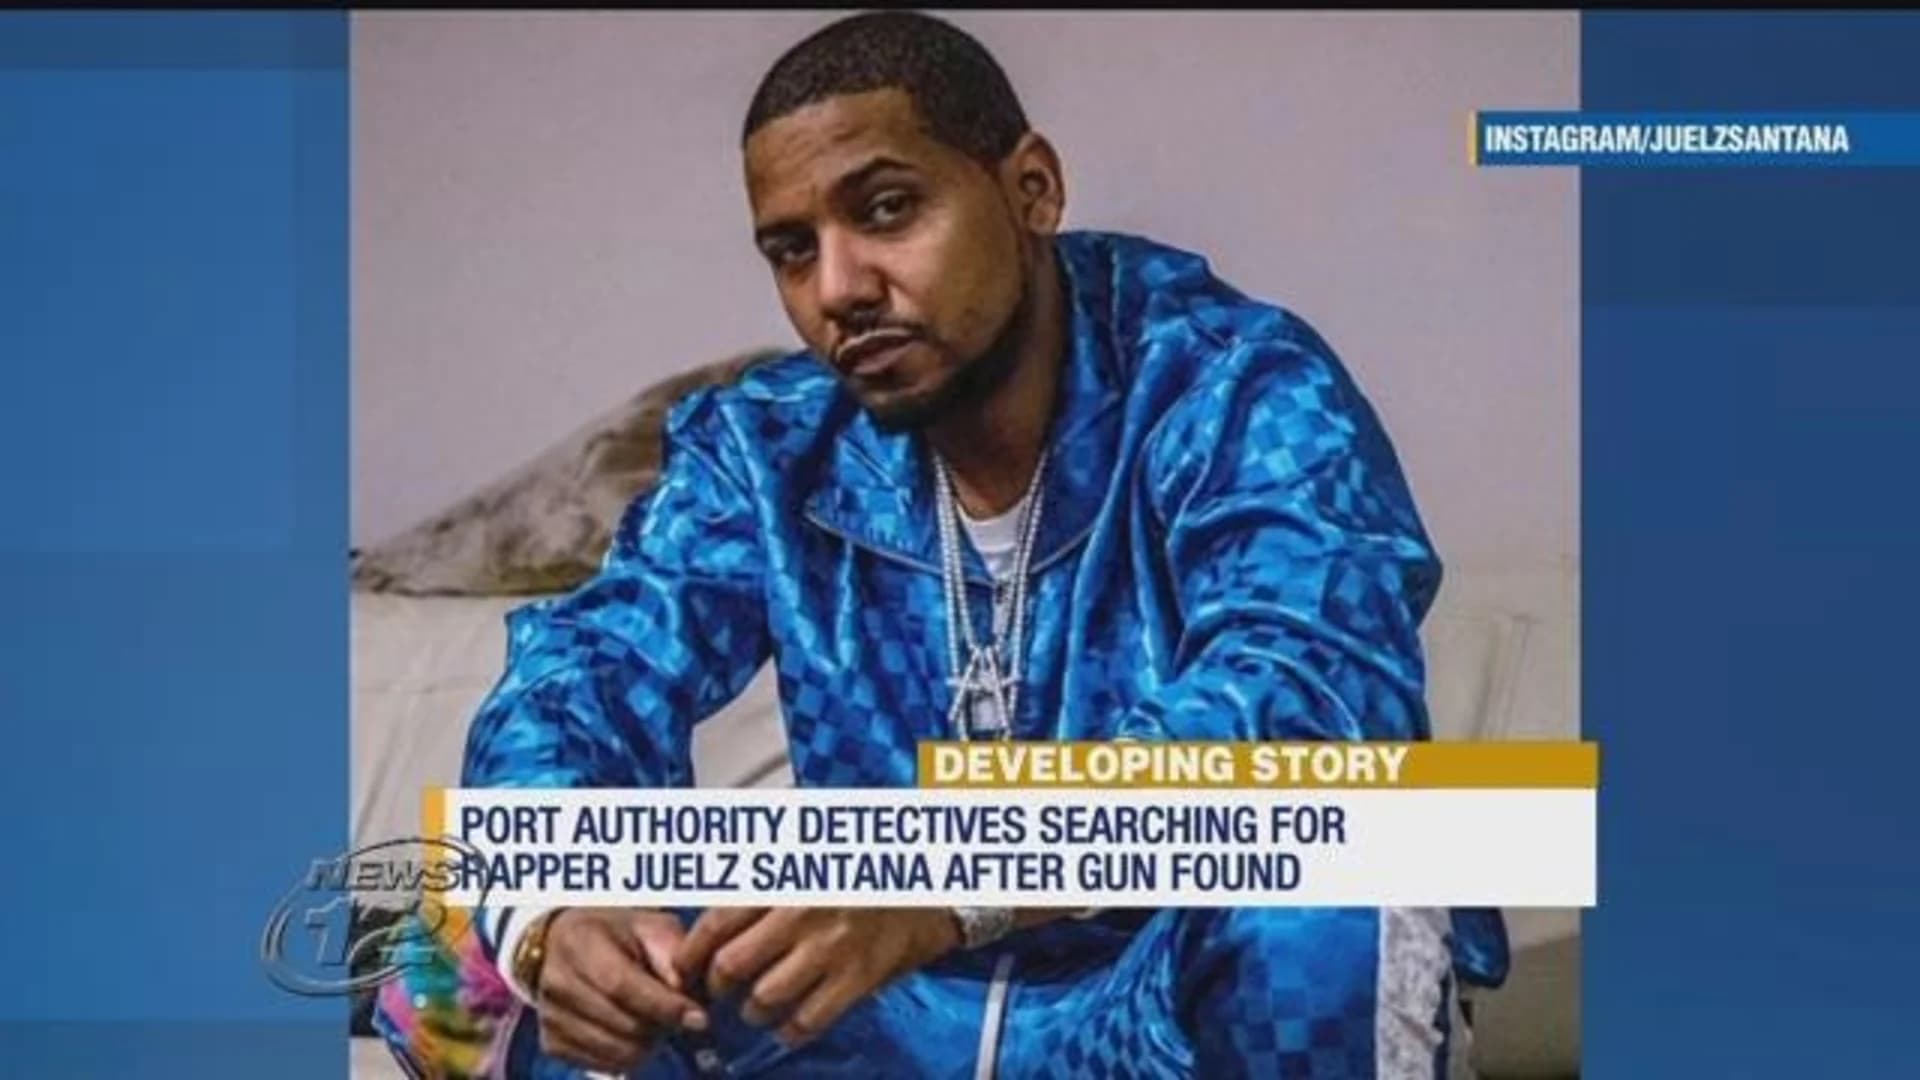 Airport police find gun in bag, suspect rapper Juelz Santana